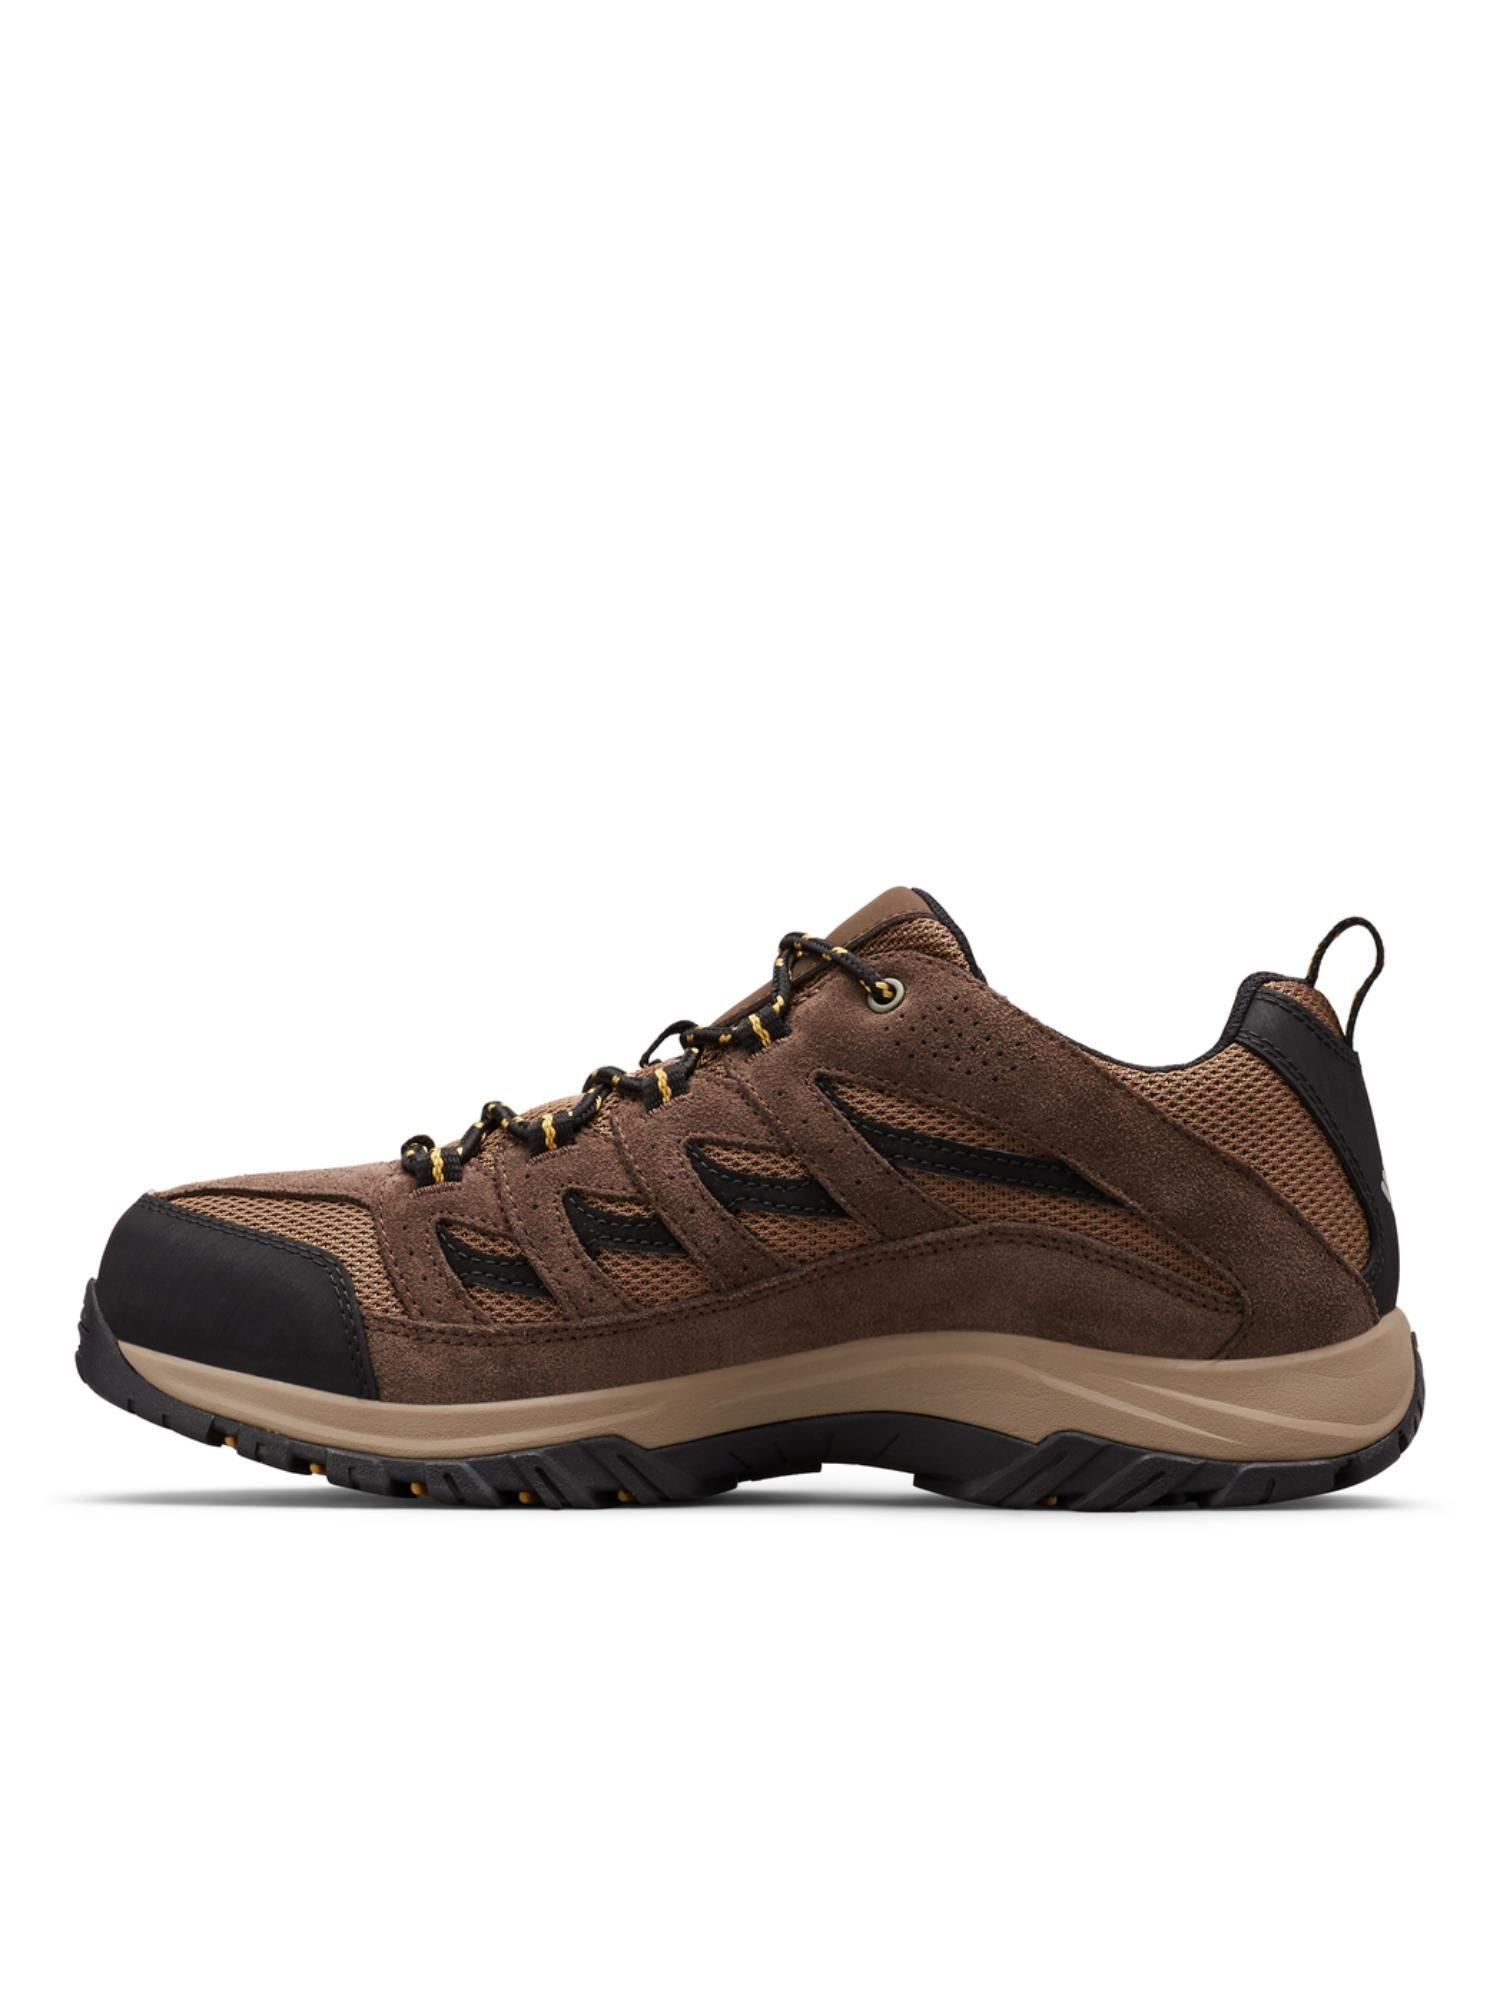 mens brown crestwood hiking & trek shoe